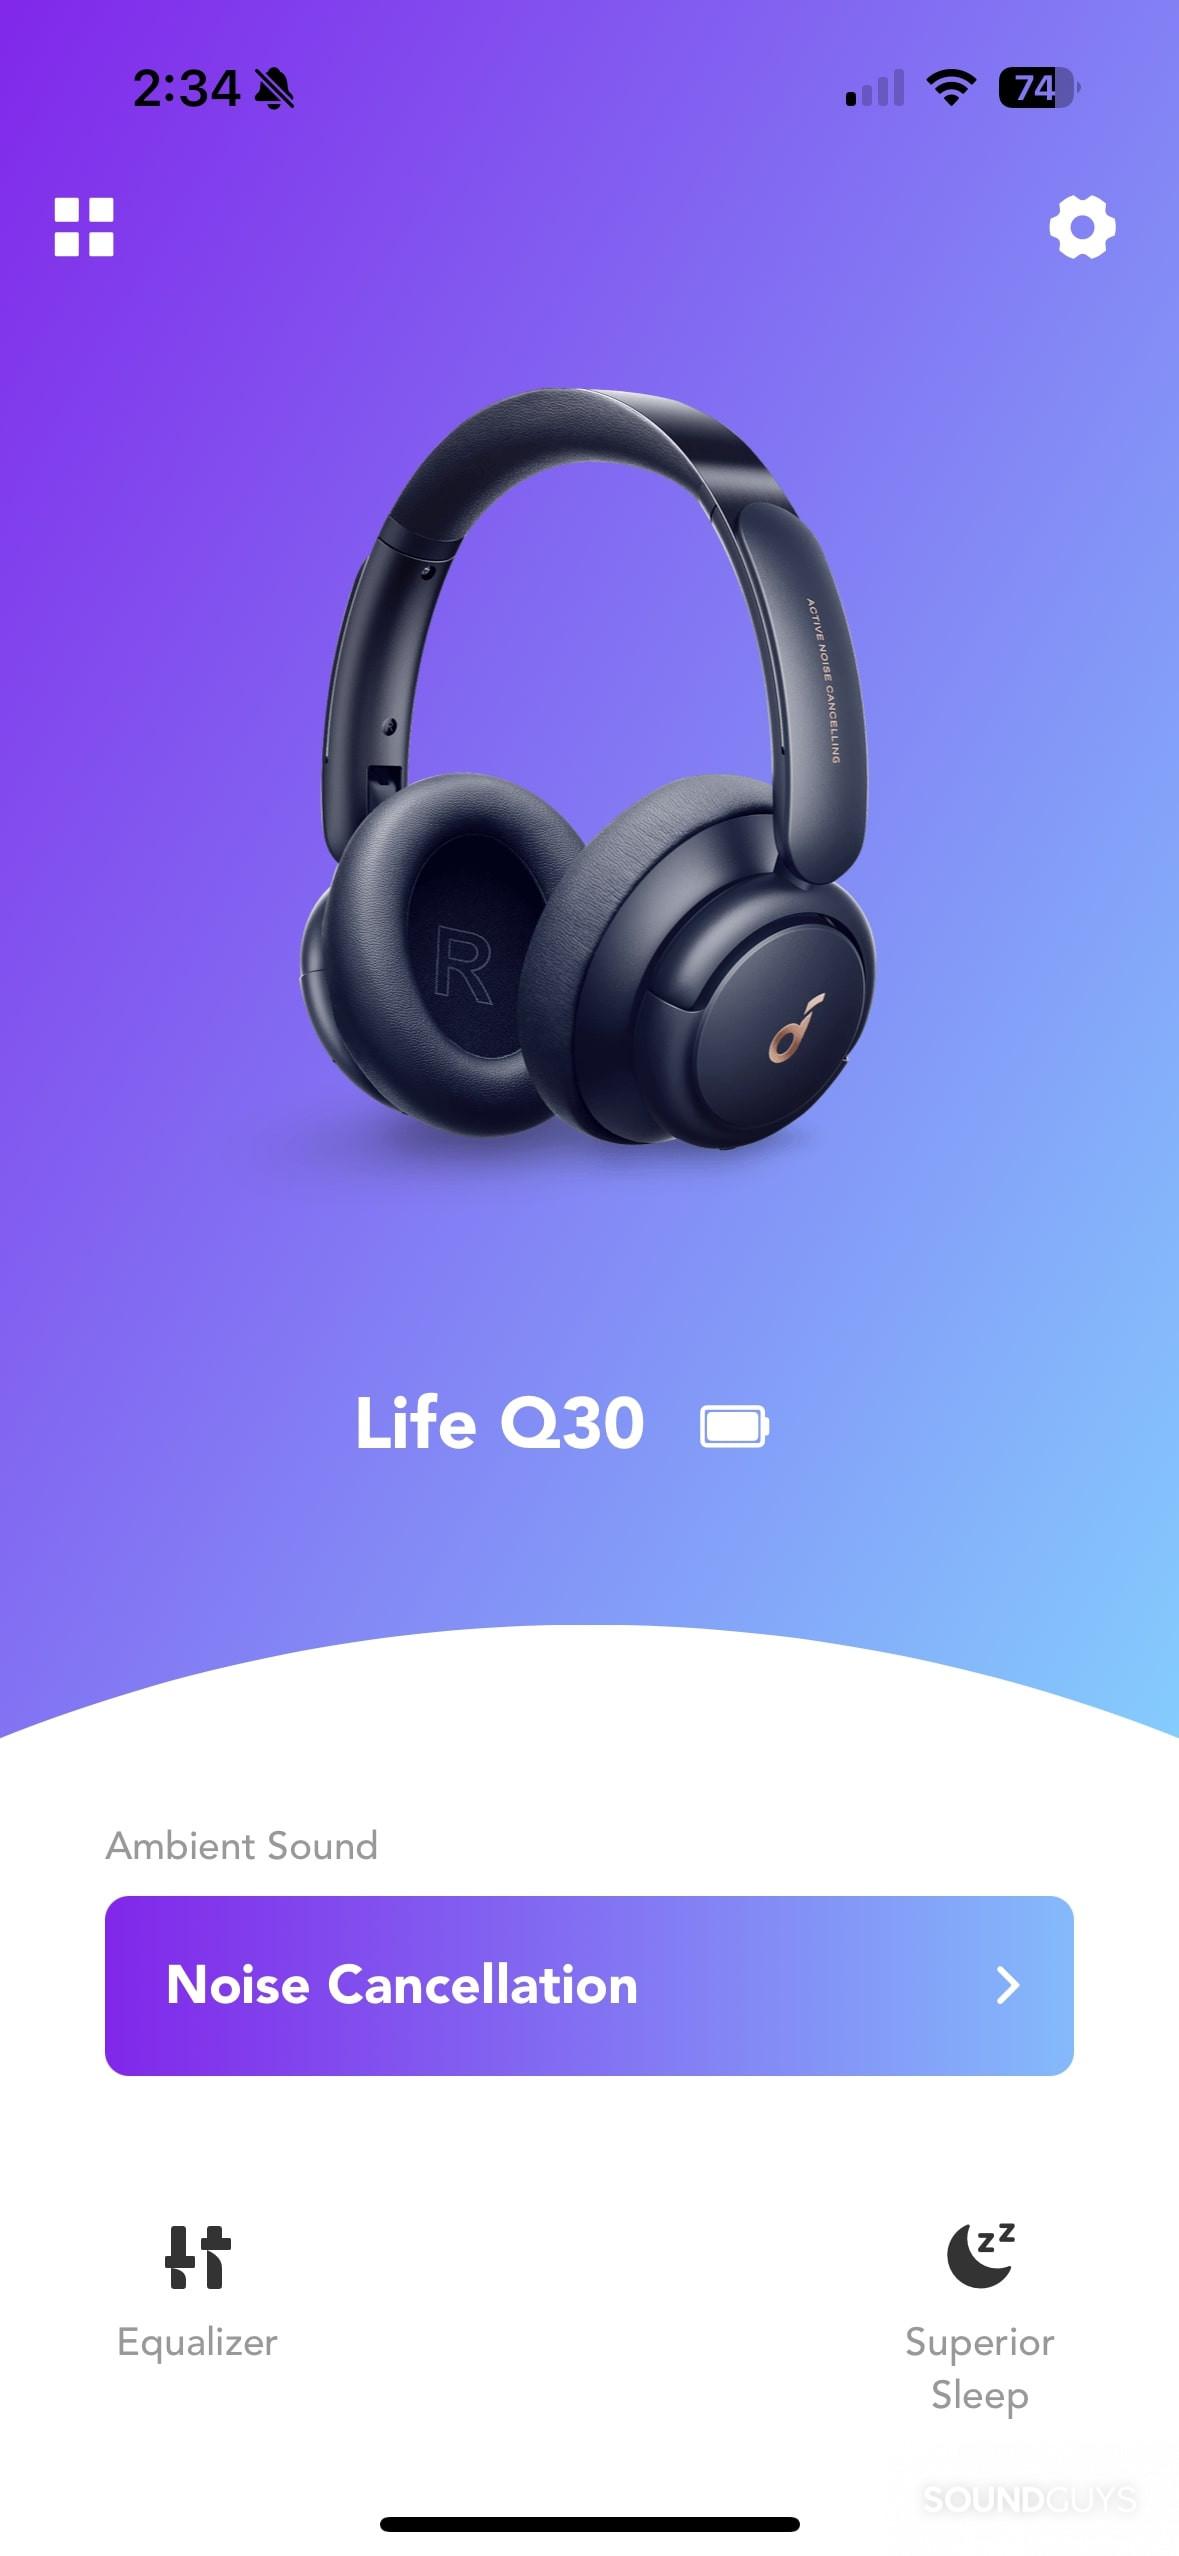 Anker Soundcore Life Q30 Soundcore app homescreen.